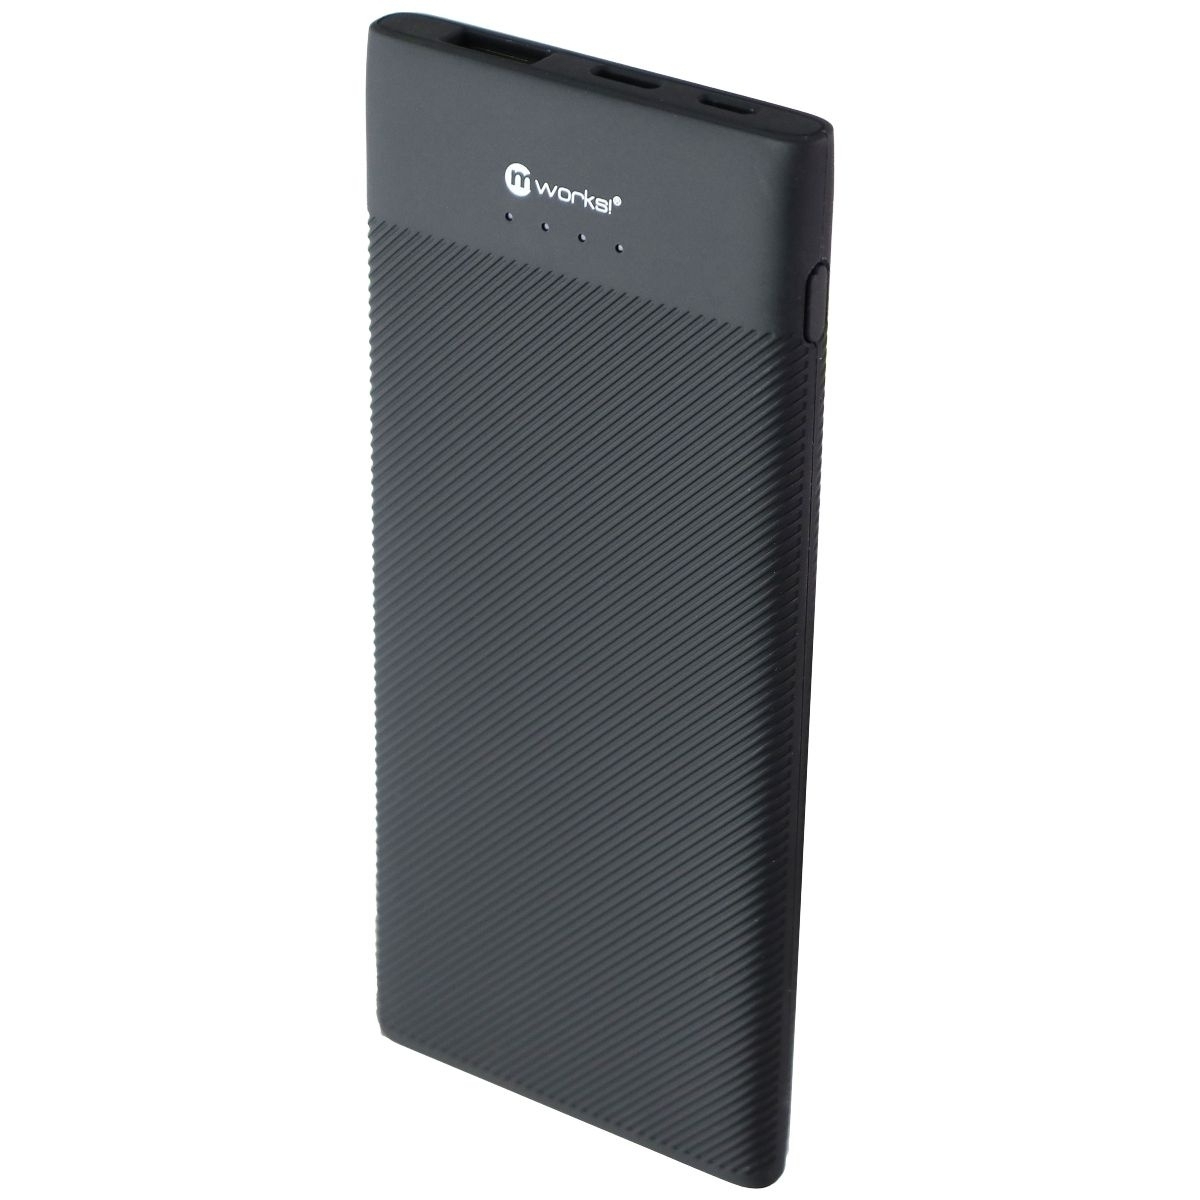 MWorks! MPOWER! 5,000mAh Portable USB And USB-C Power Bank - Black GRADE A